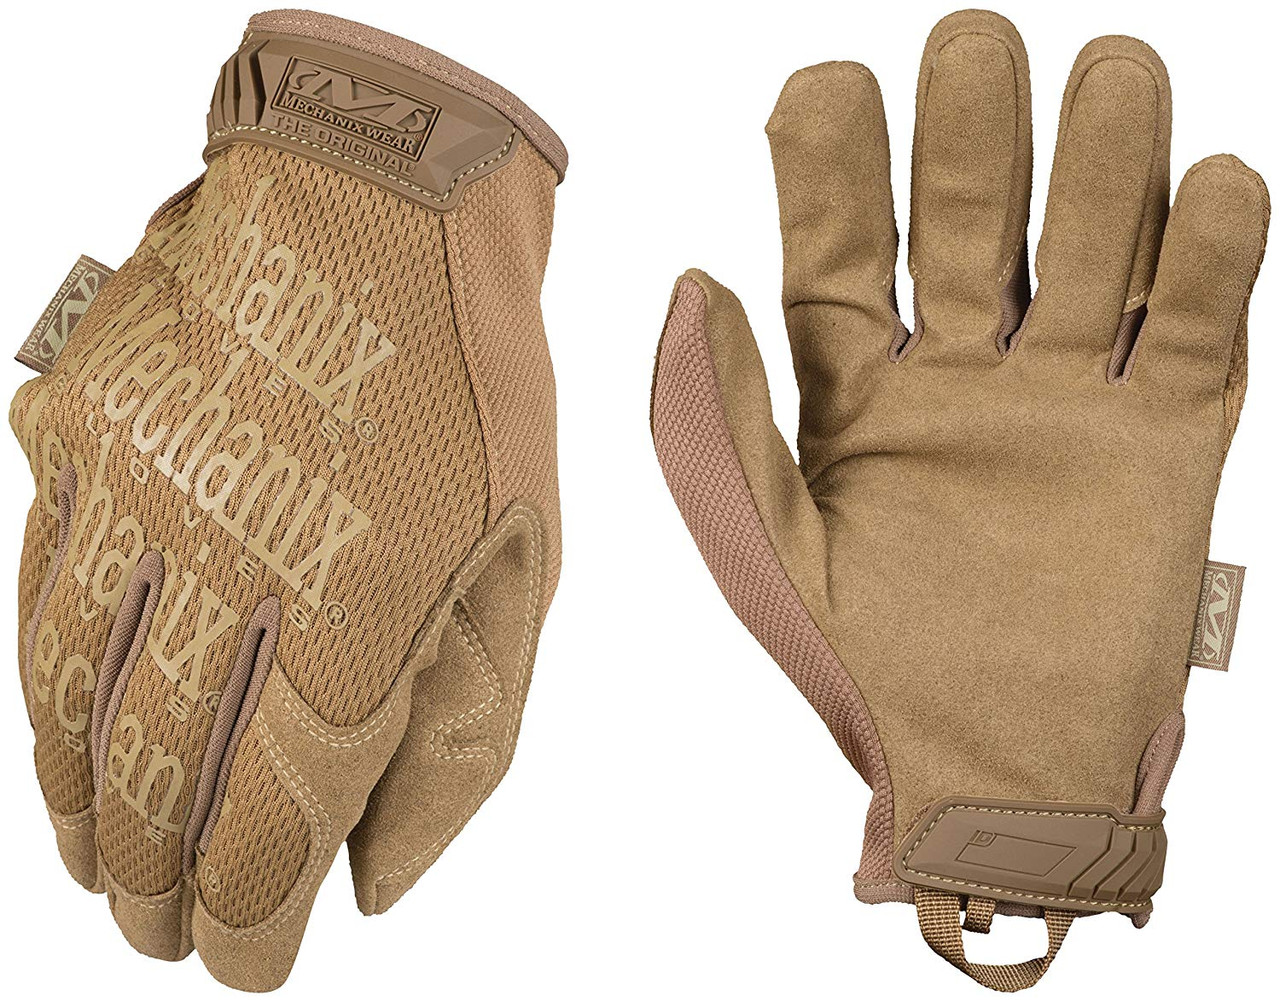 Mechanix Wear mg-72-010 les gants originaux, brun coyote, grand